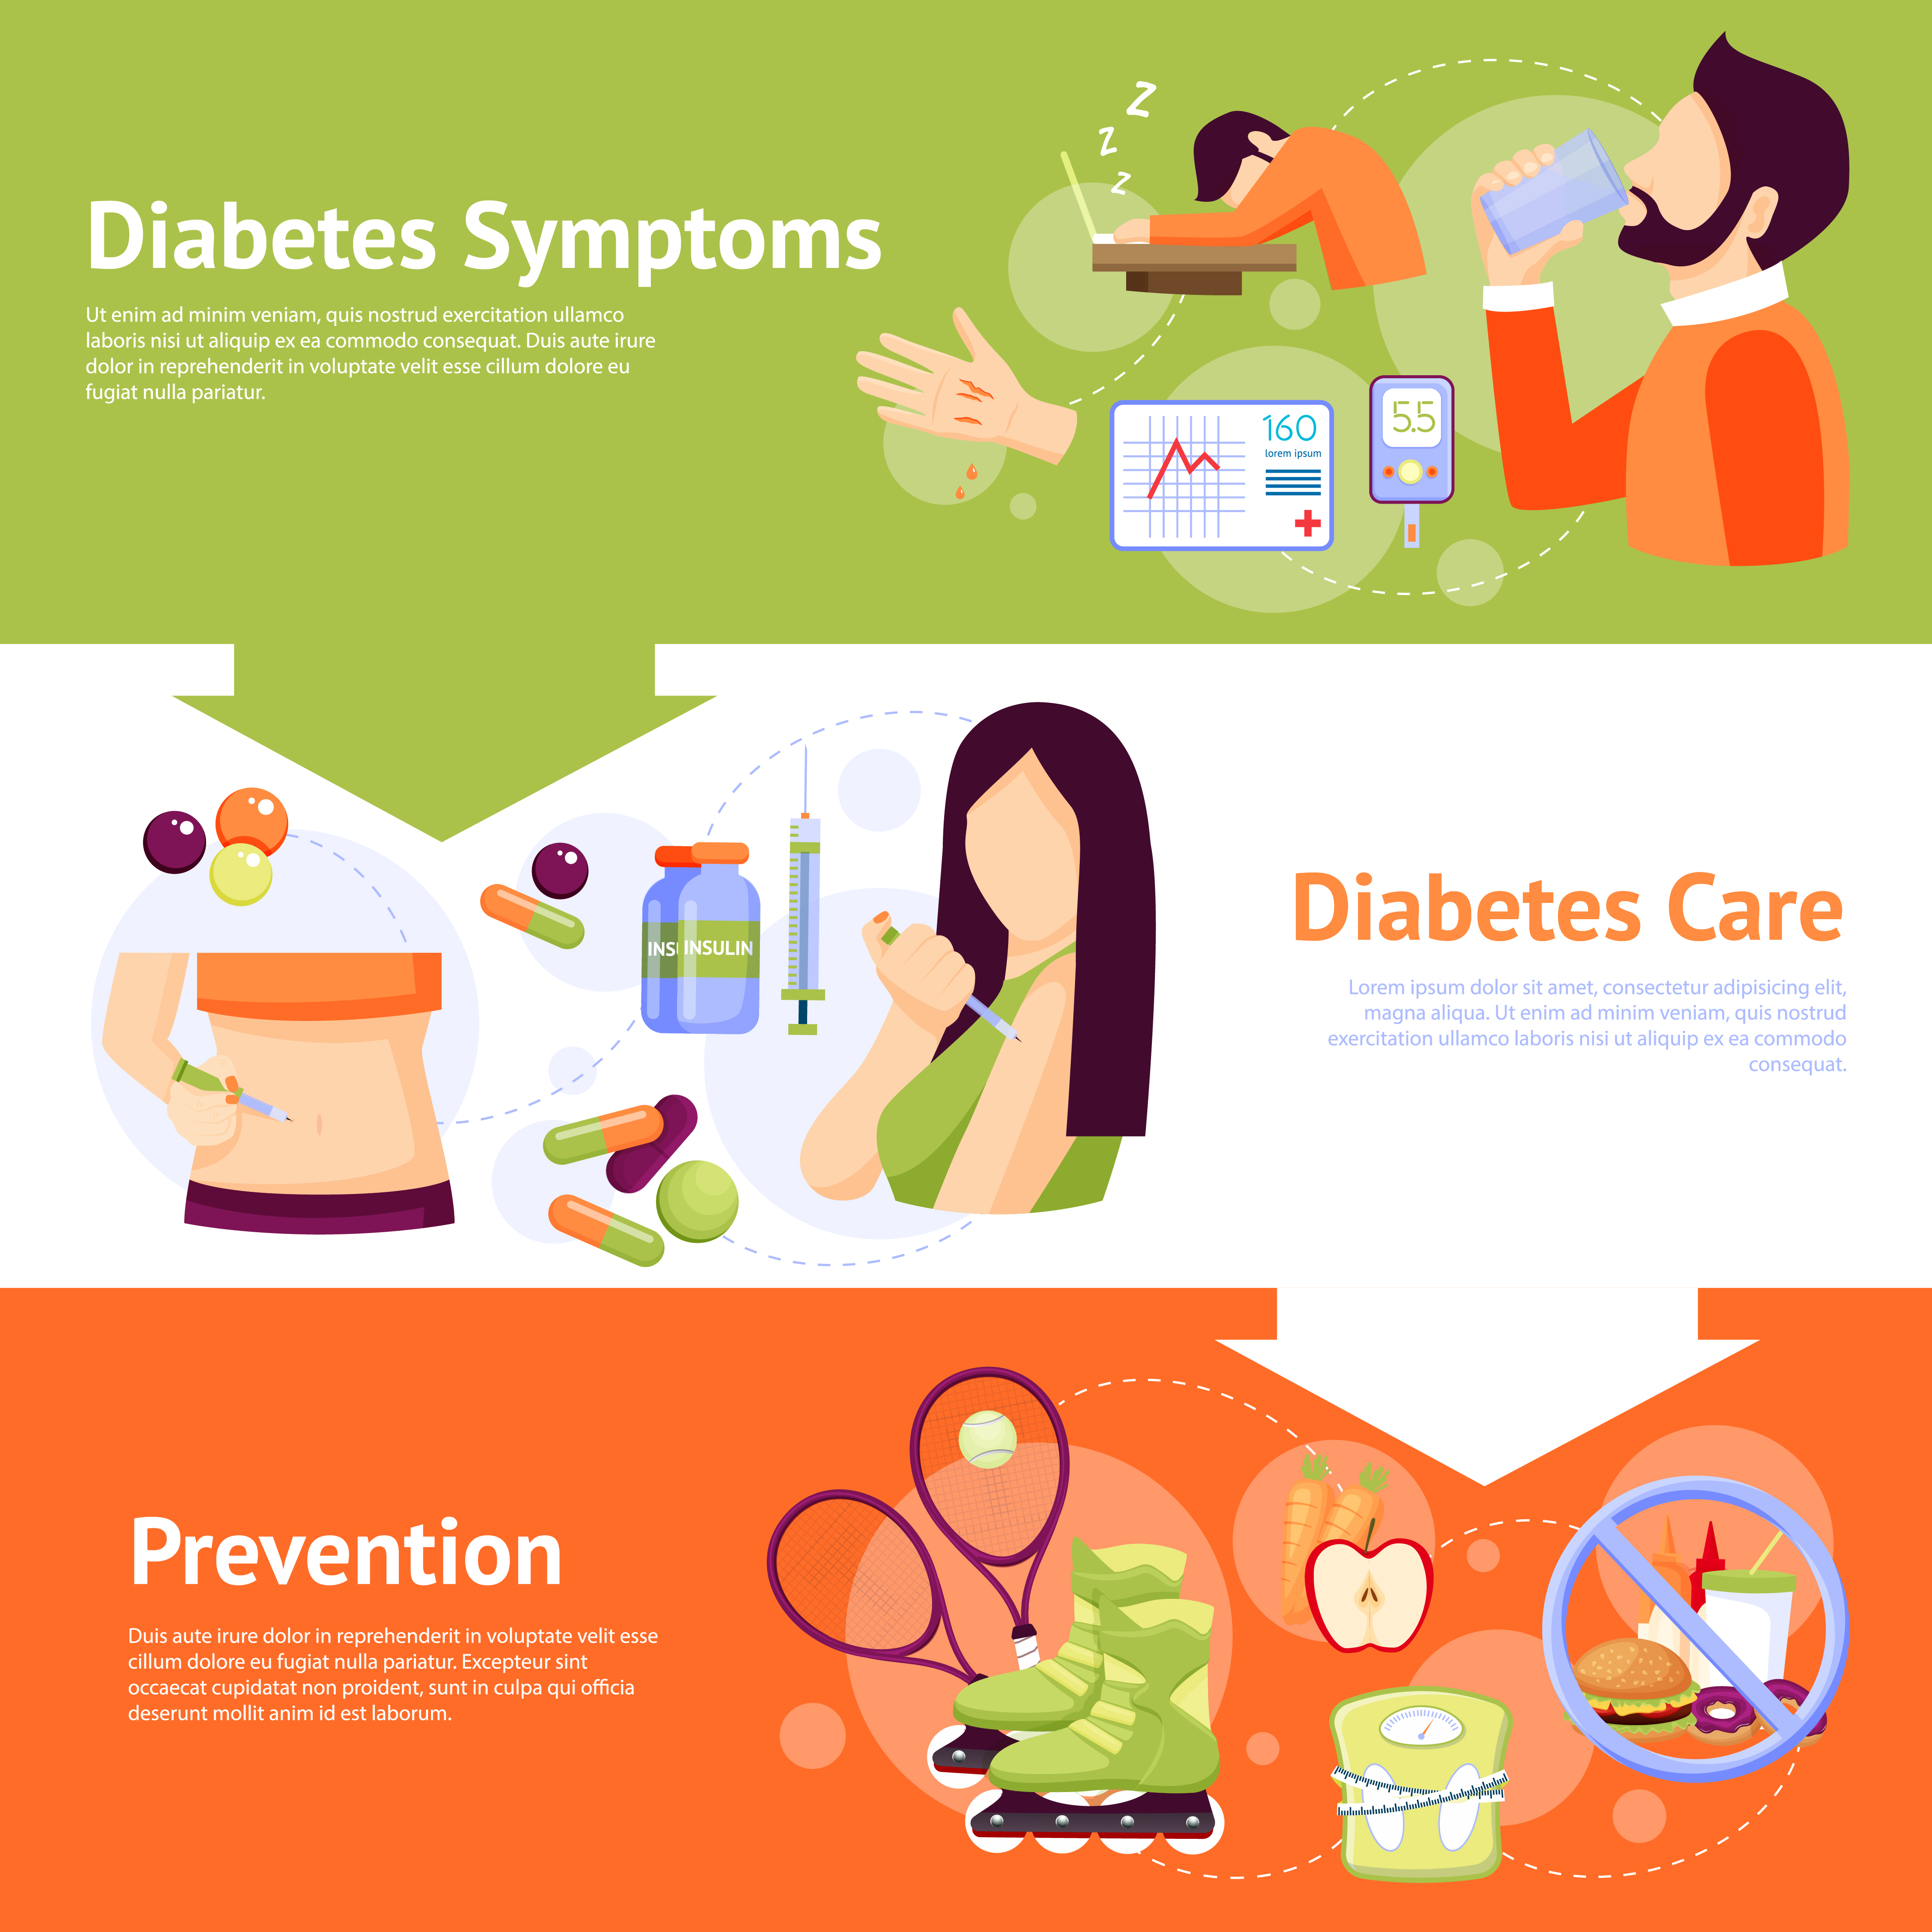 Diabetes: Symptoms and Complications